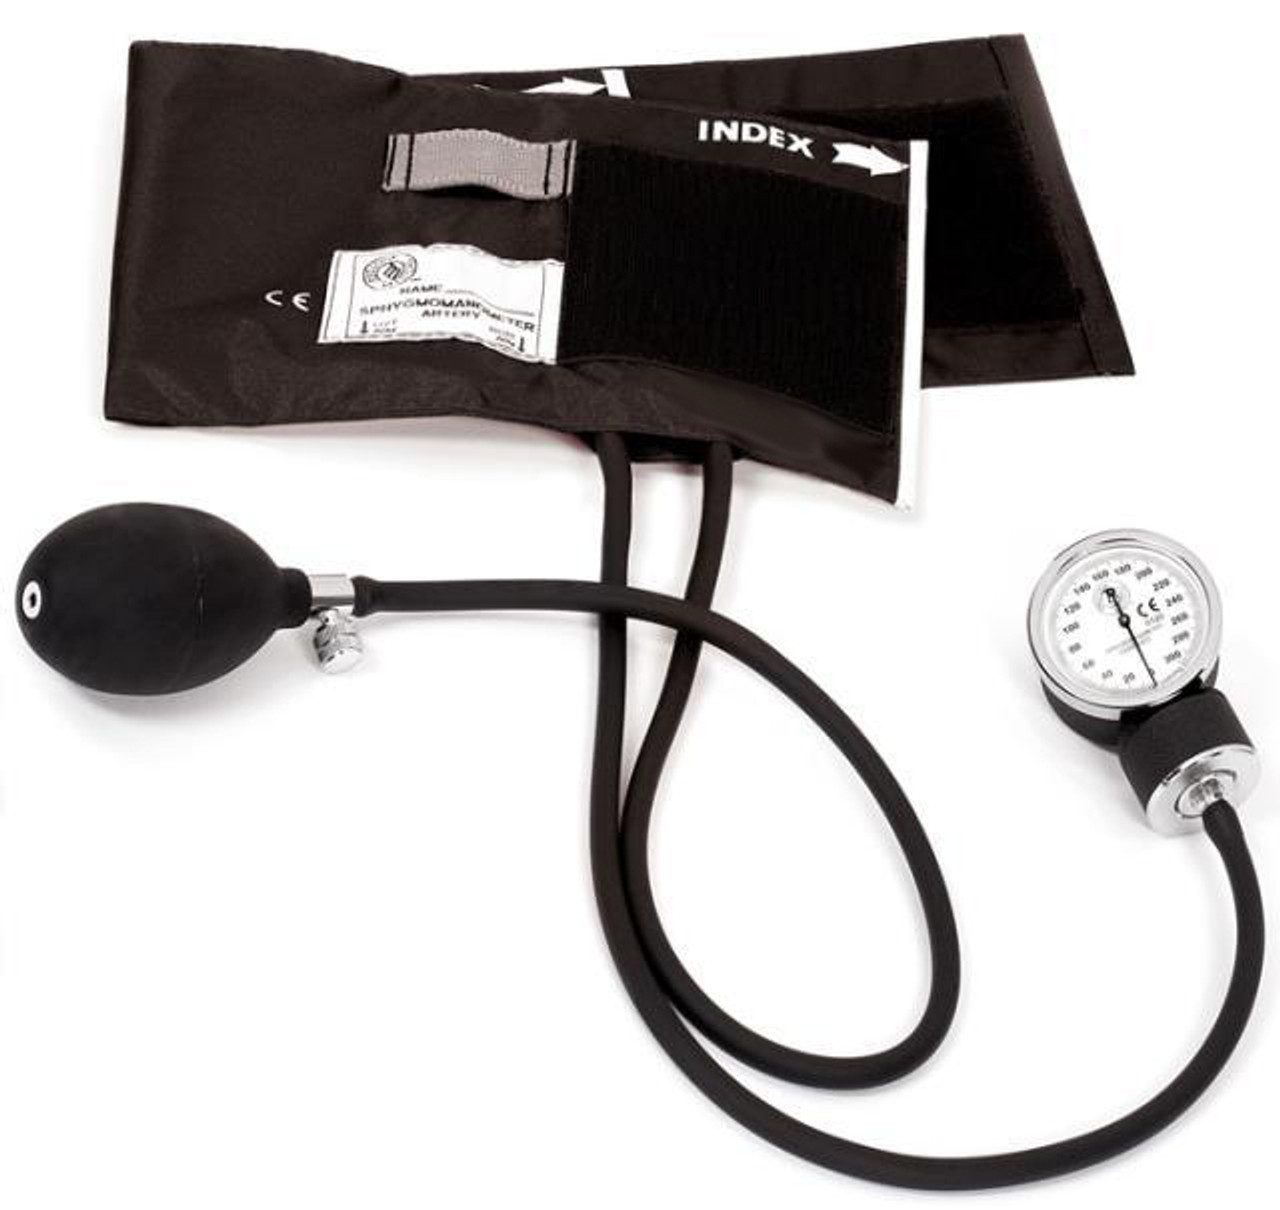 Pediatric Blood Pressure Monitor